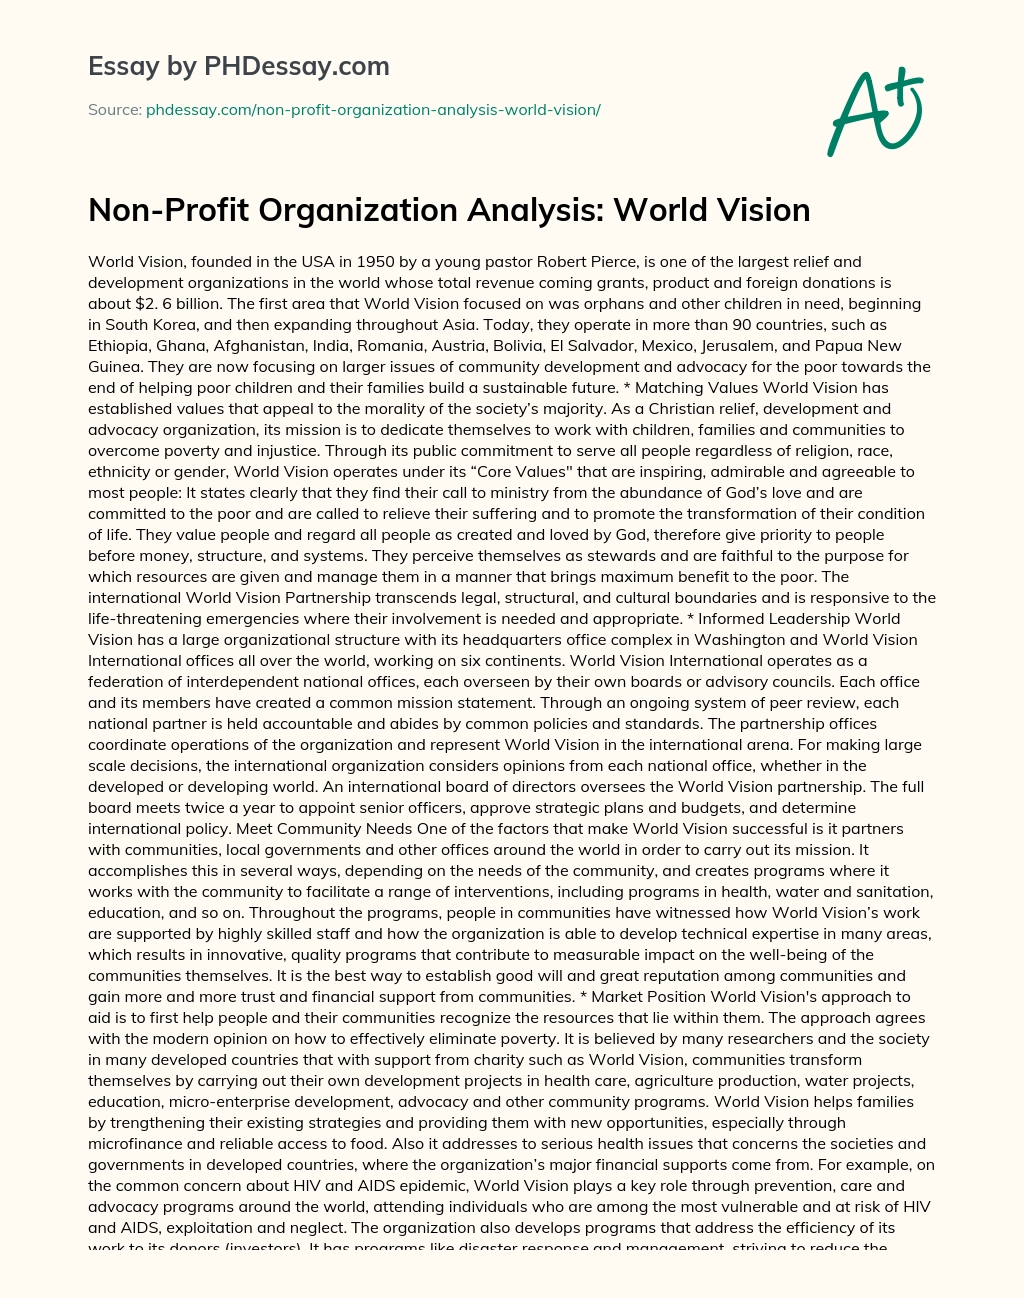 Non-Profit Organization Analysis: World Vision essay